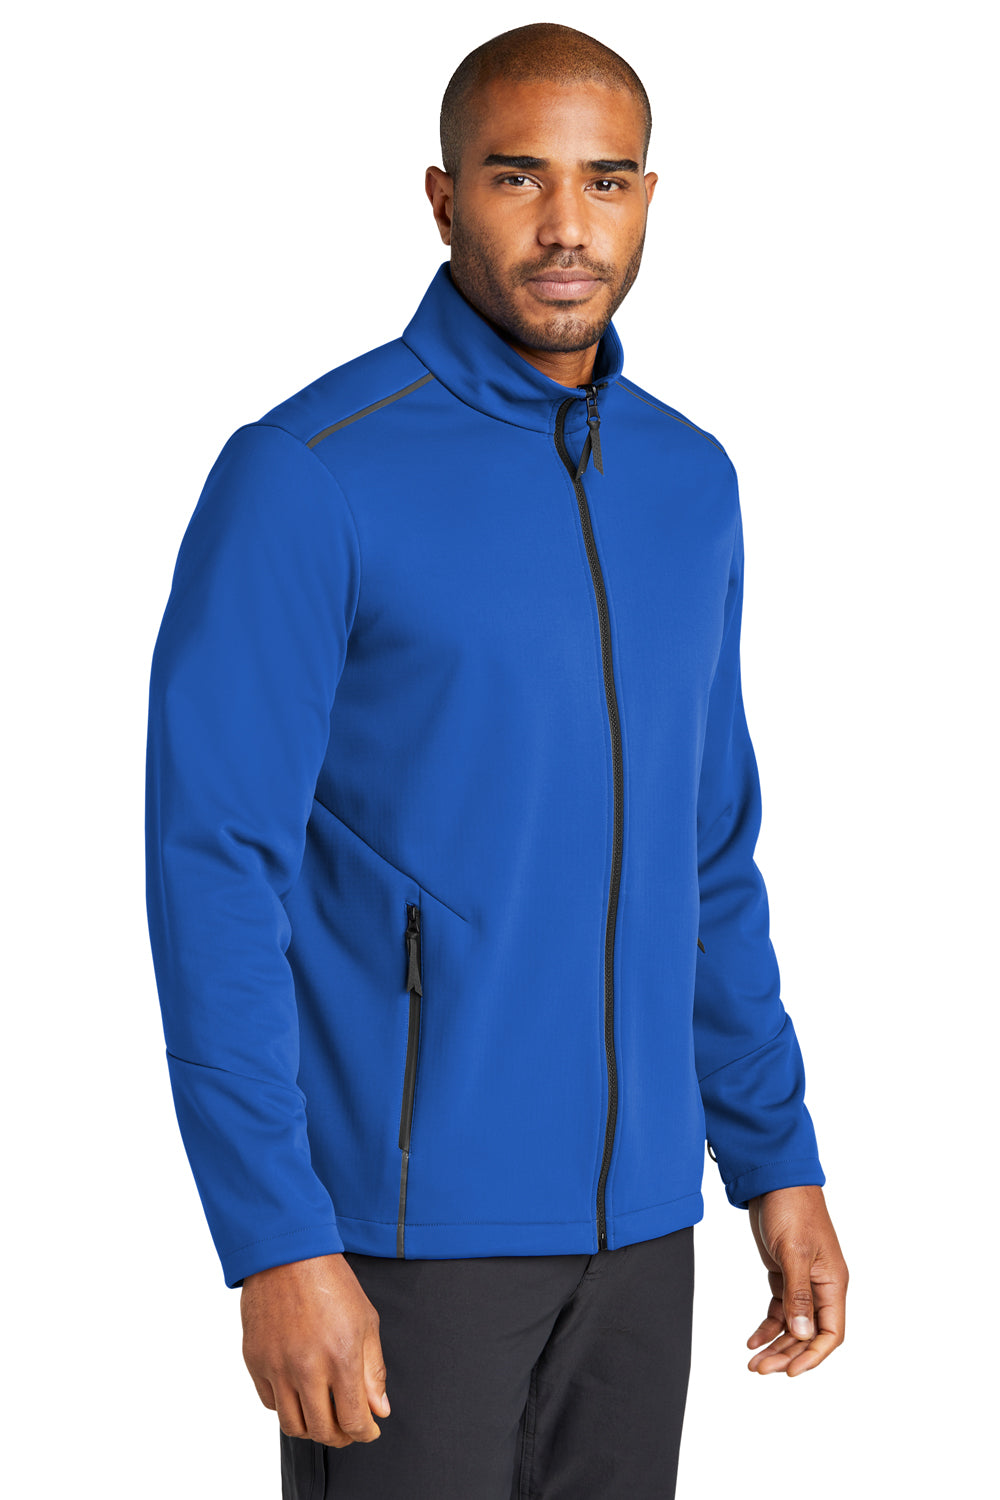 Port Authority J921 Collective Tech Full Zip Soft Shell Jacket True Royal Blue 3Q